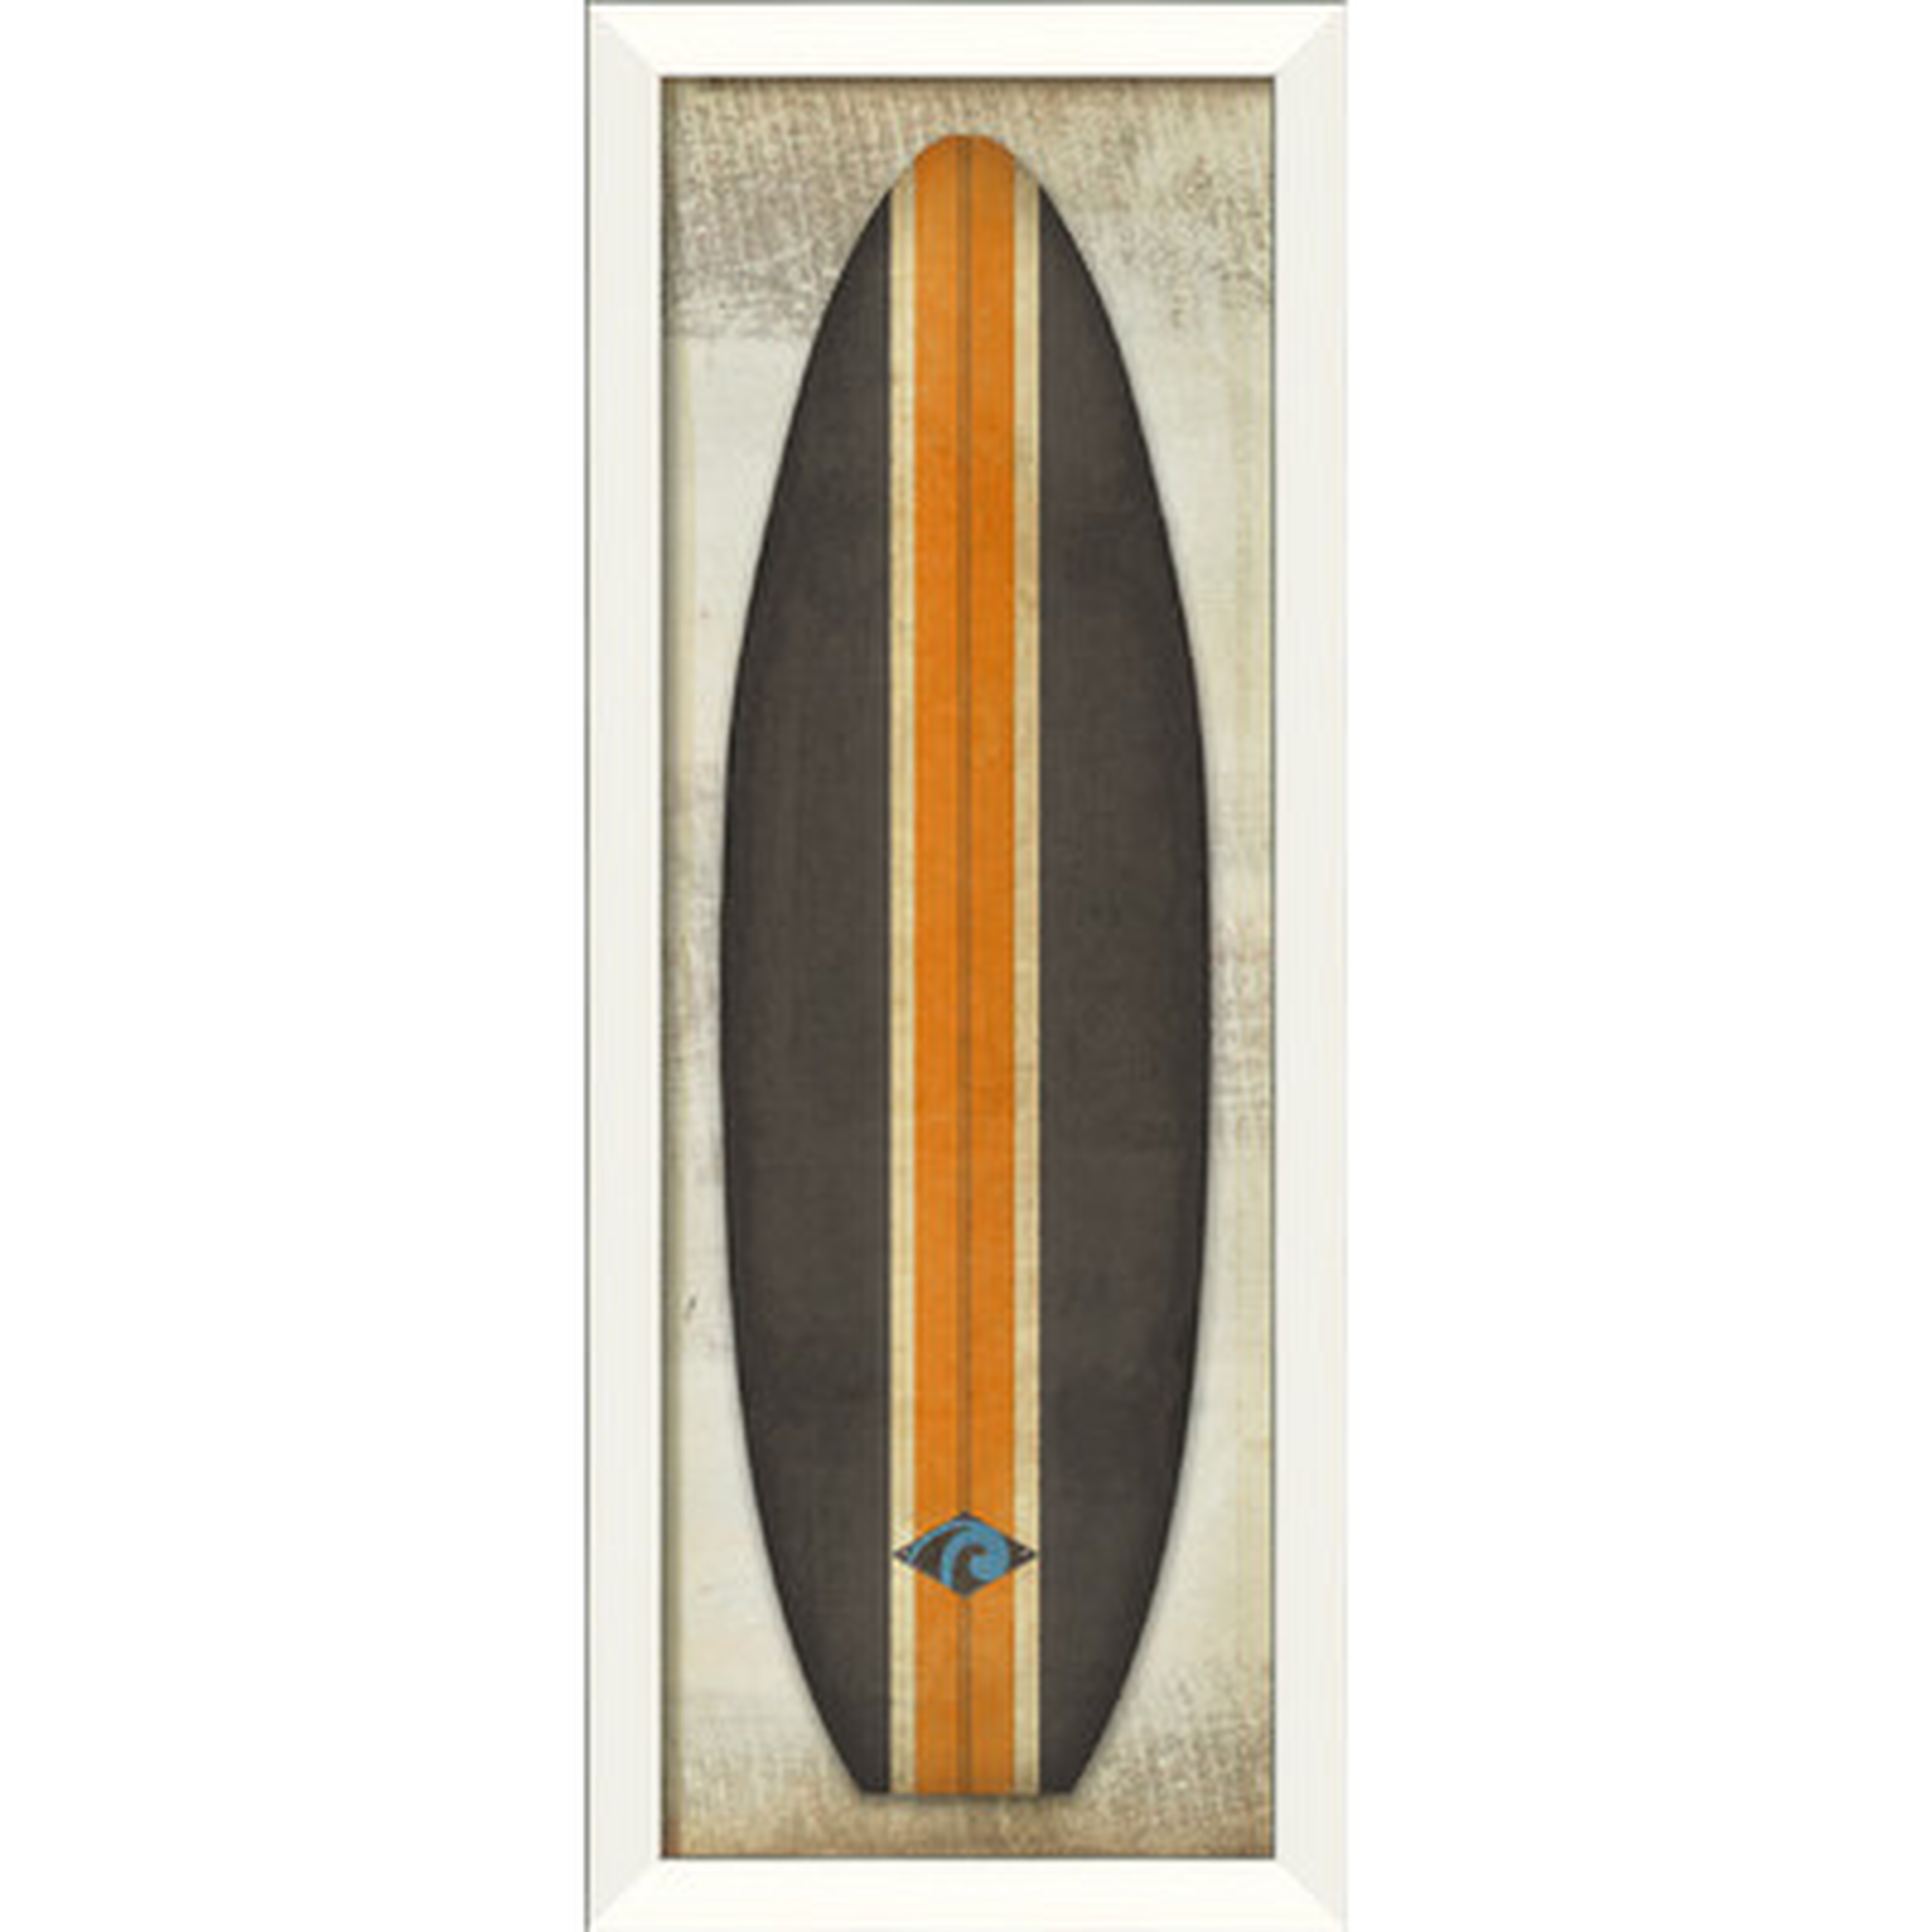 Malibu Classic Surfboard Framed Graphic Art in Orange and Black - Wayfair